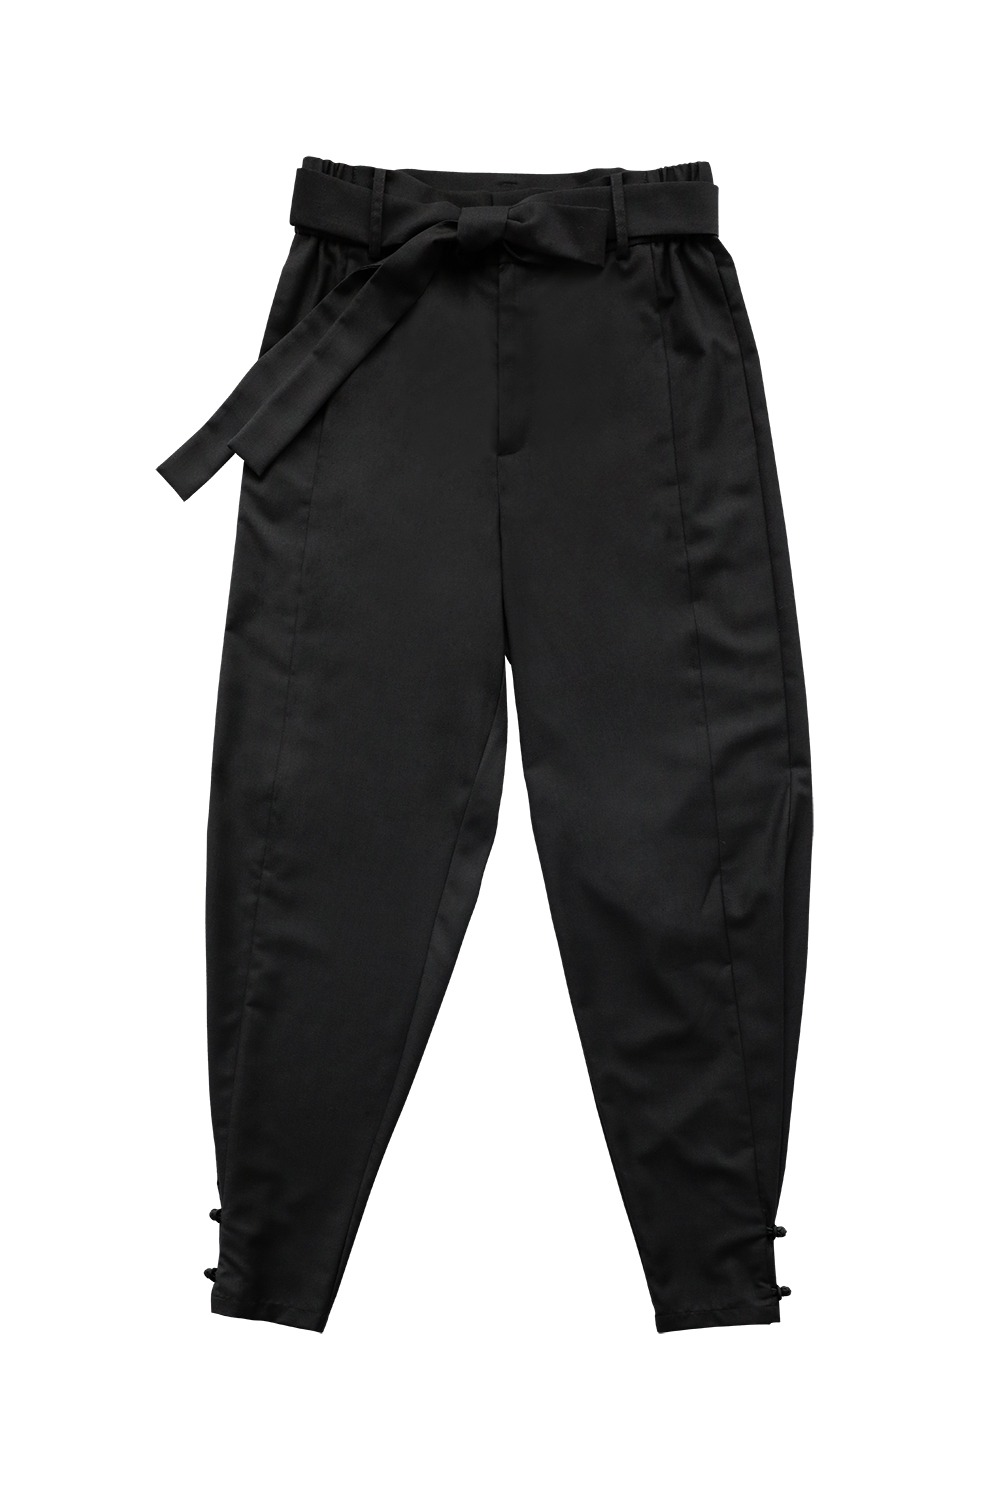 Classic Maru Hanbok Pants [Black]